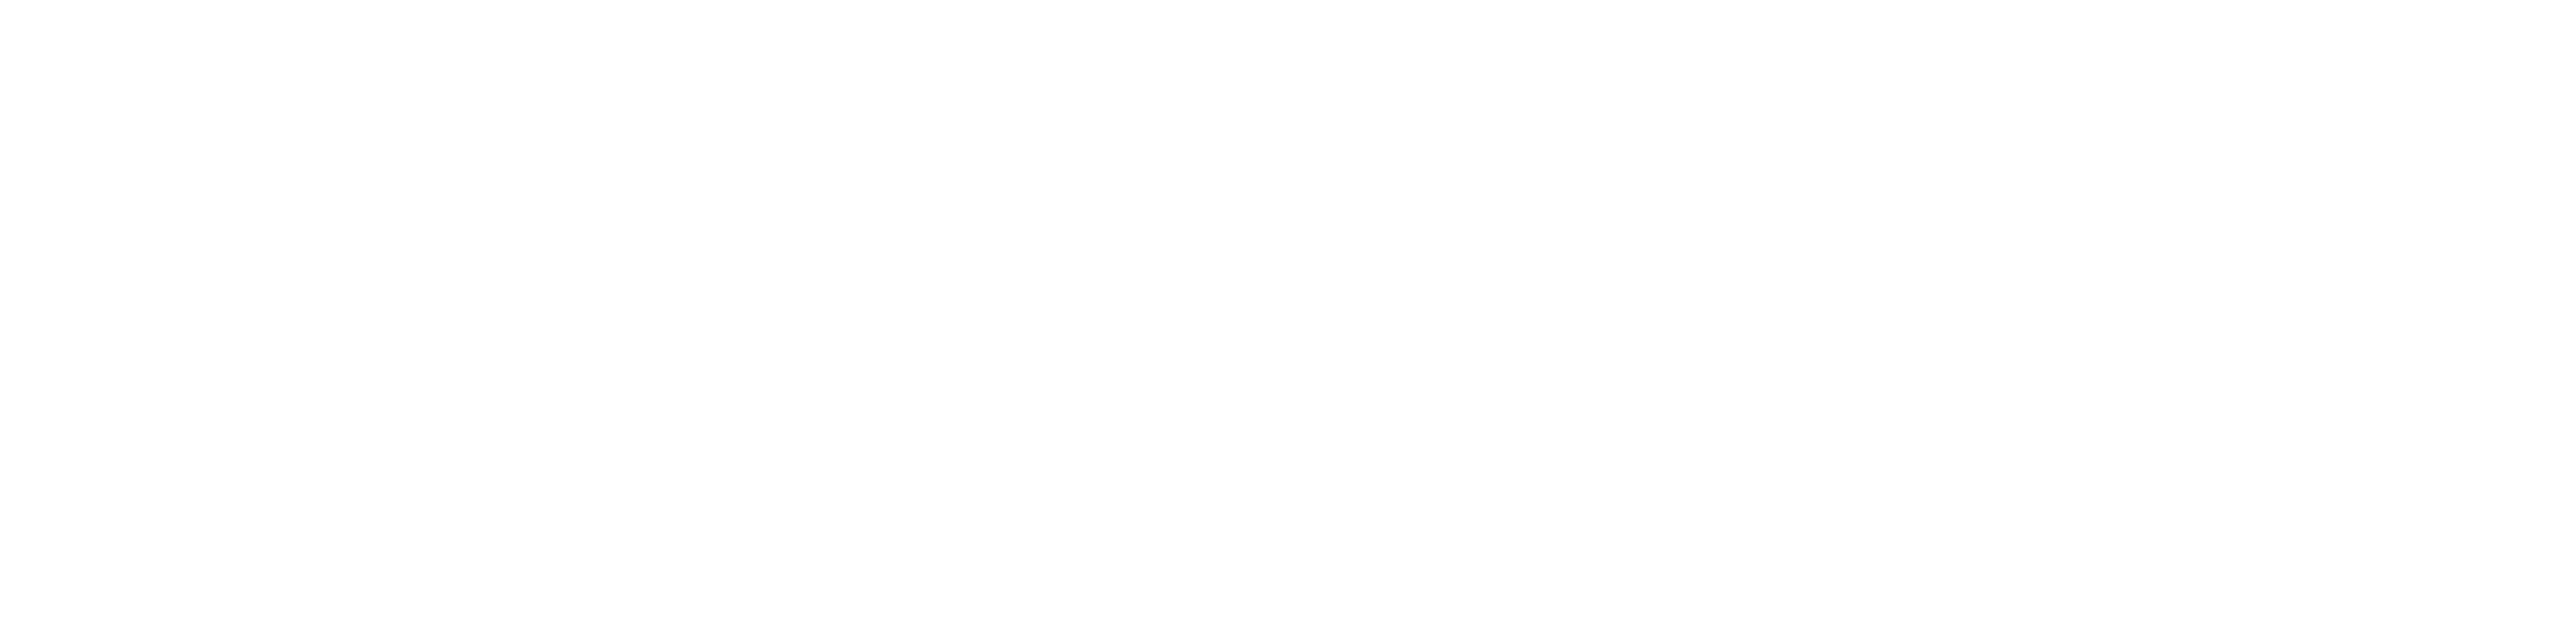 UPS Green Logistics and Environmental Responsibility